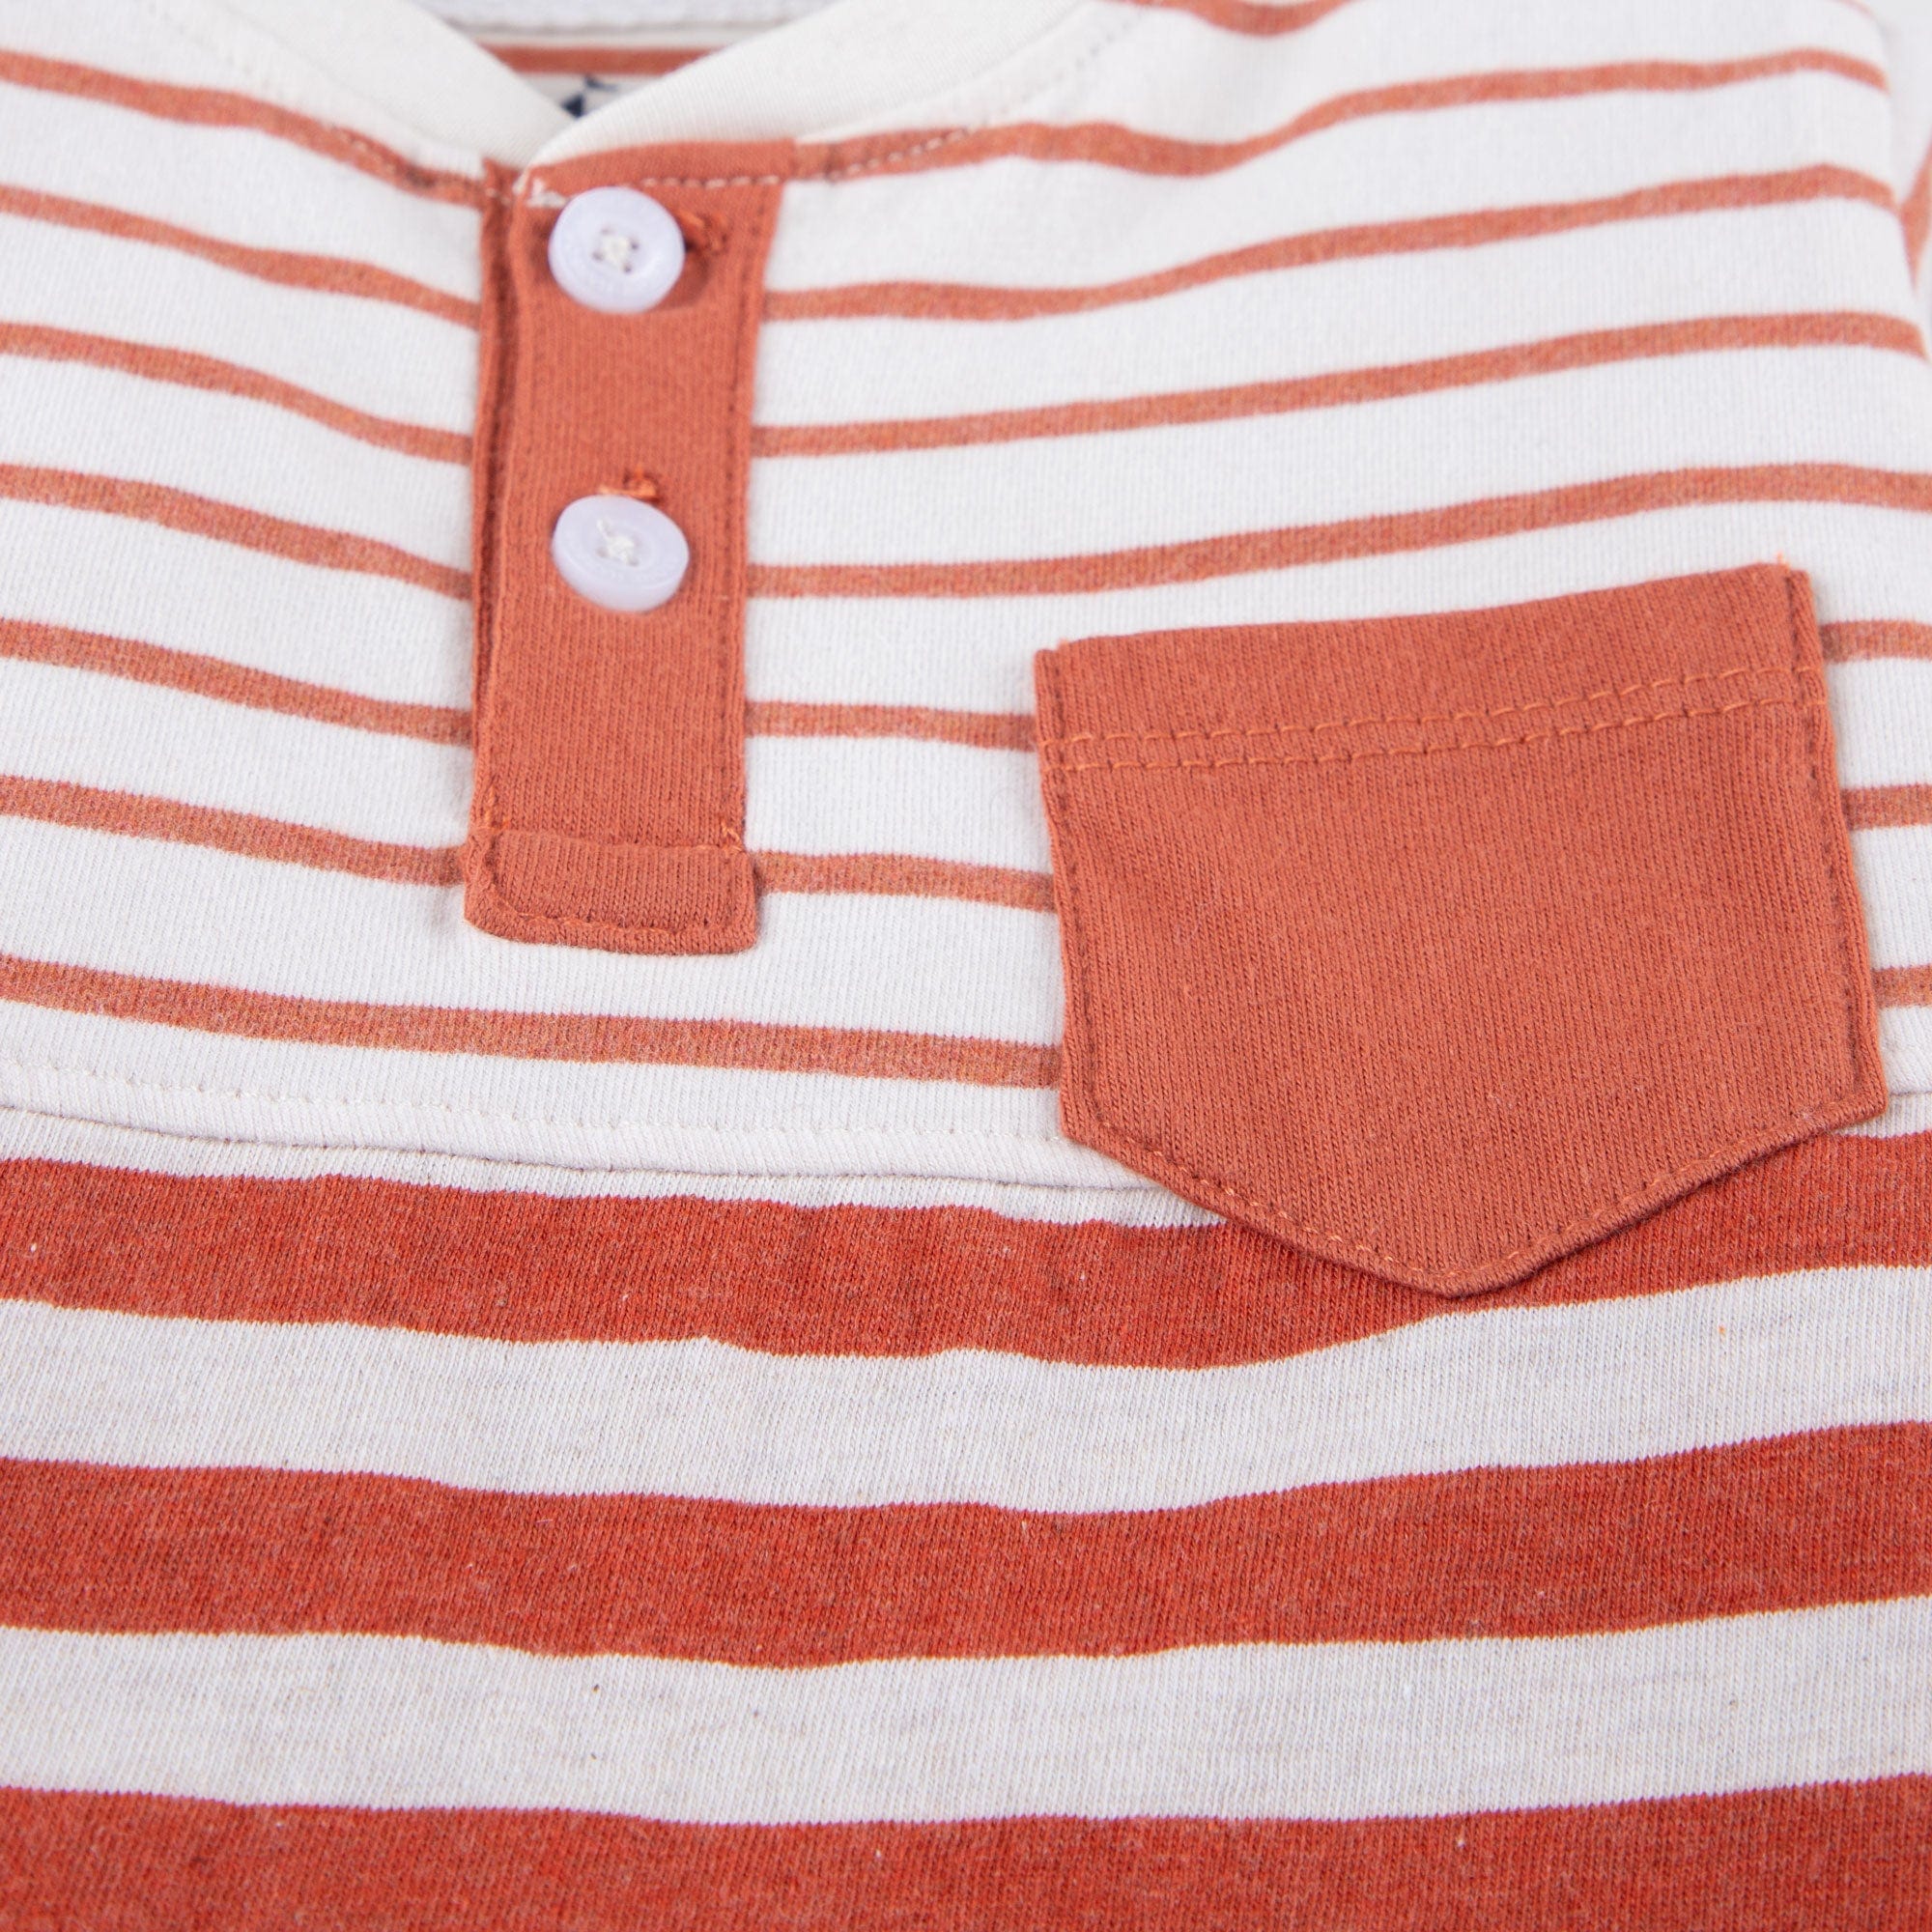 Stone Harbor Boy's Tee Shirt Striper / 0-3 M BOY'S STRIPER HENELY NECK TEE SHIRT